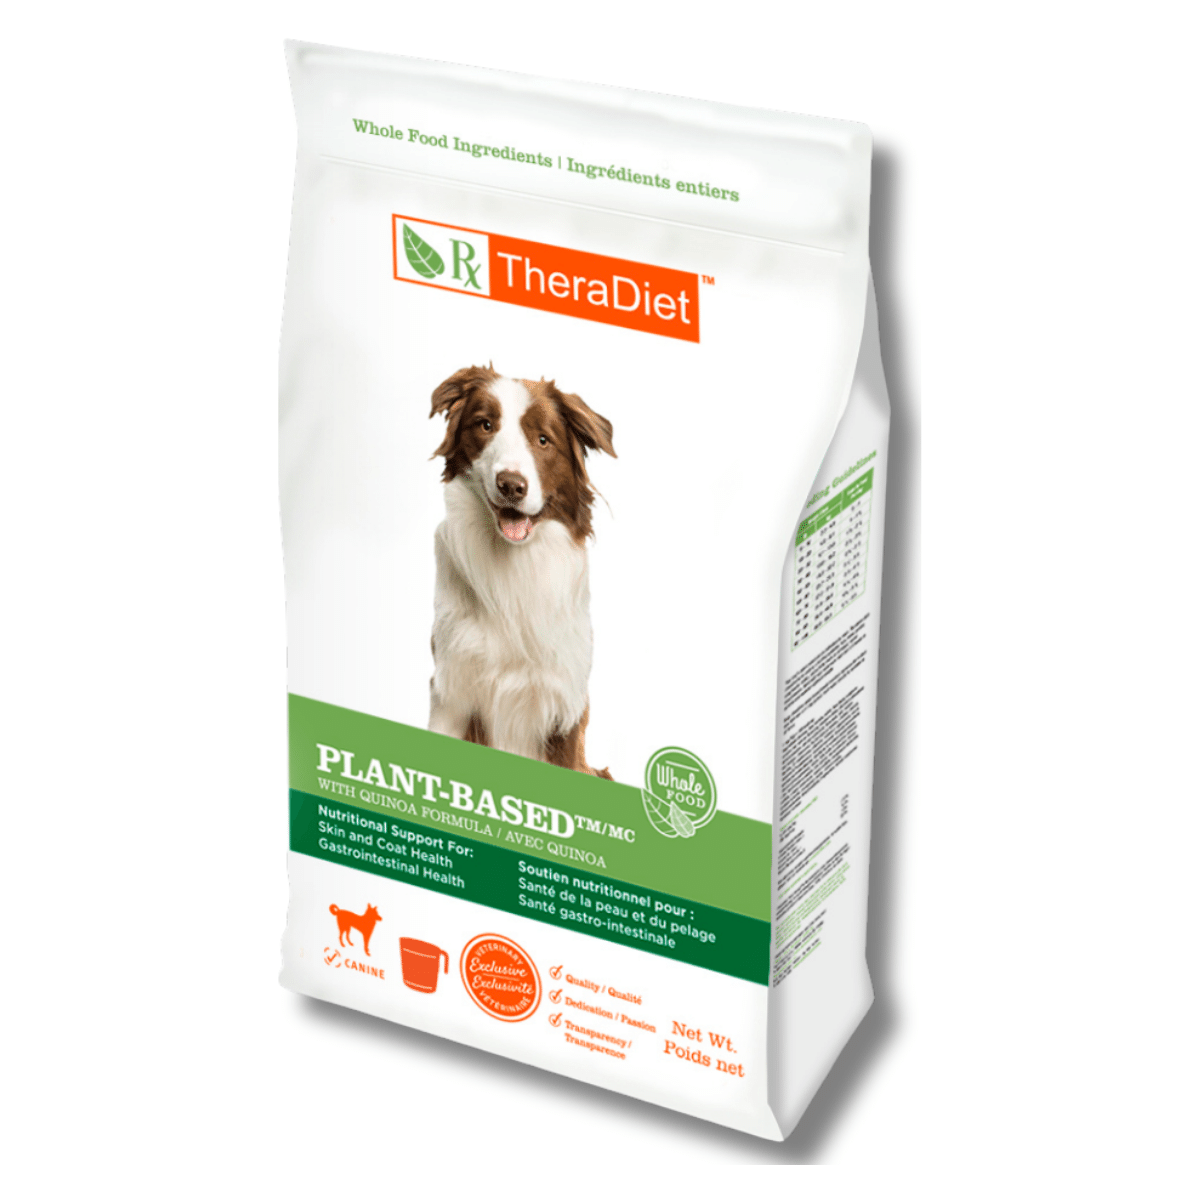 Plant-Based Dry Dog Food